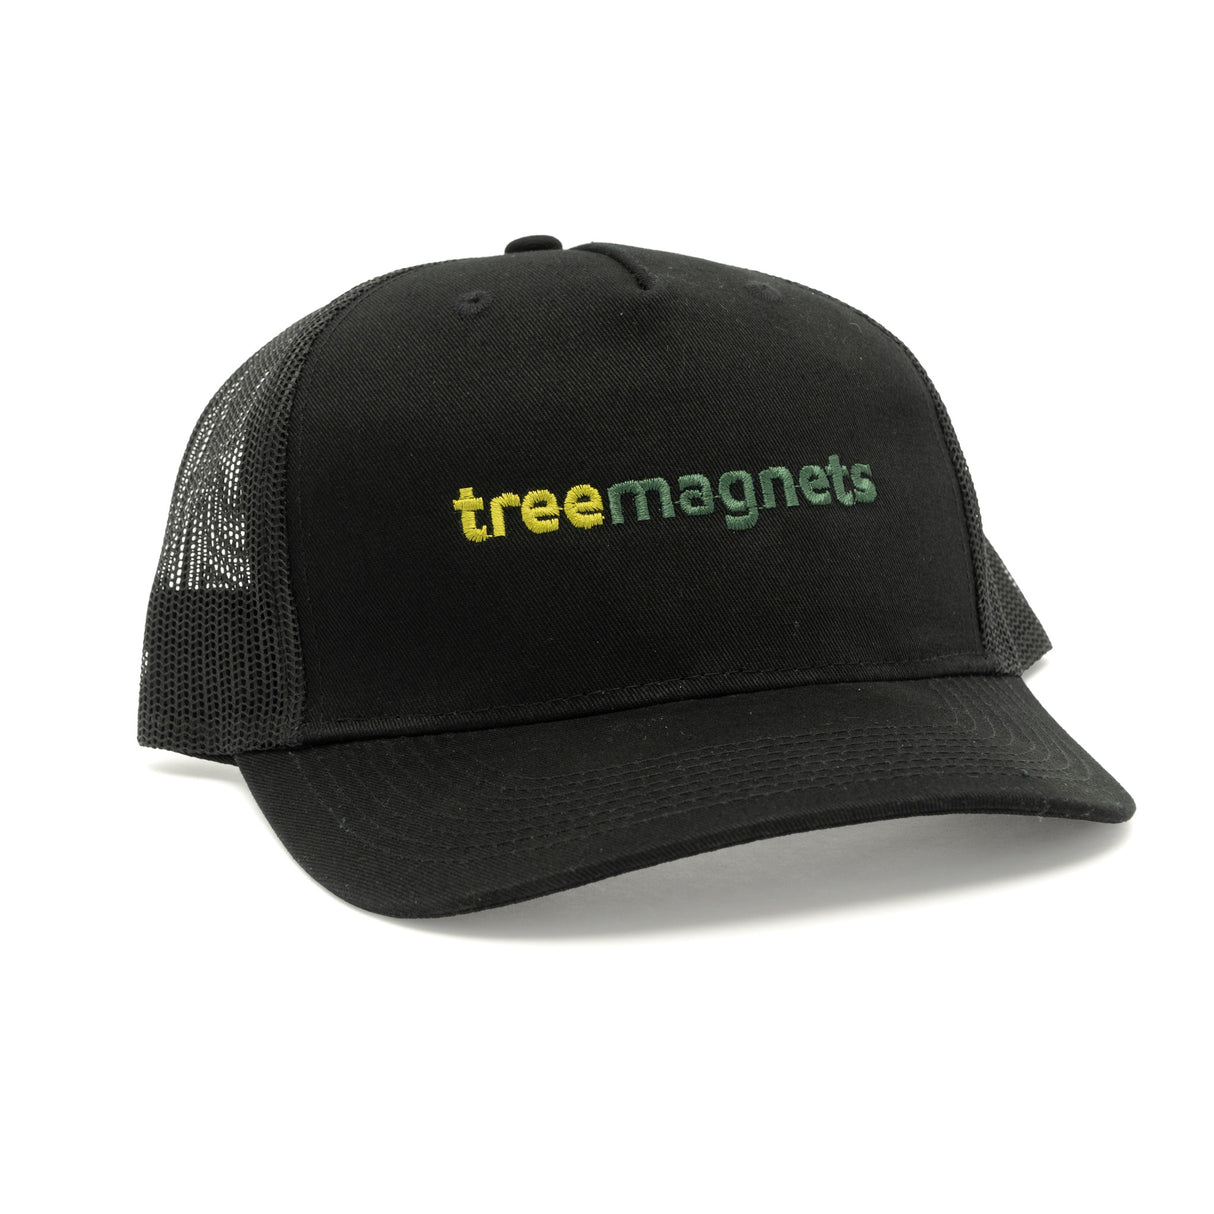 TreeMagnets Trucker Hat - Black